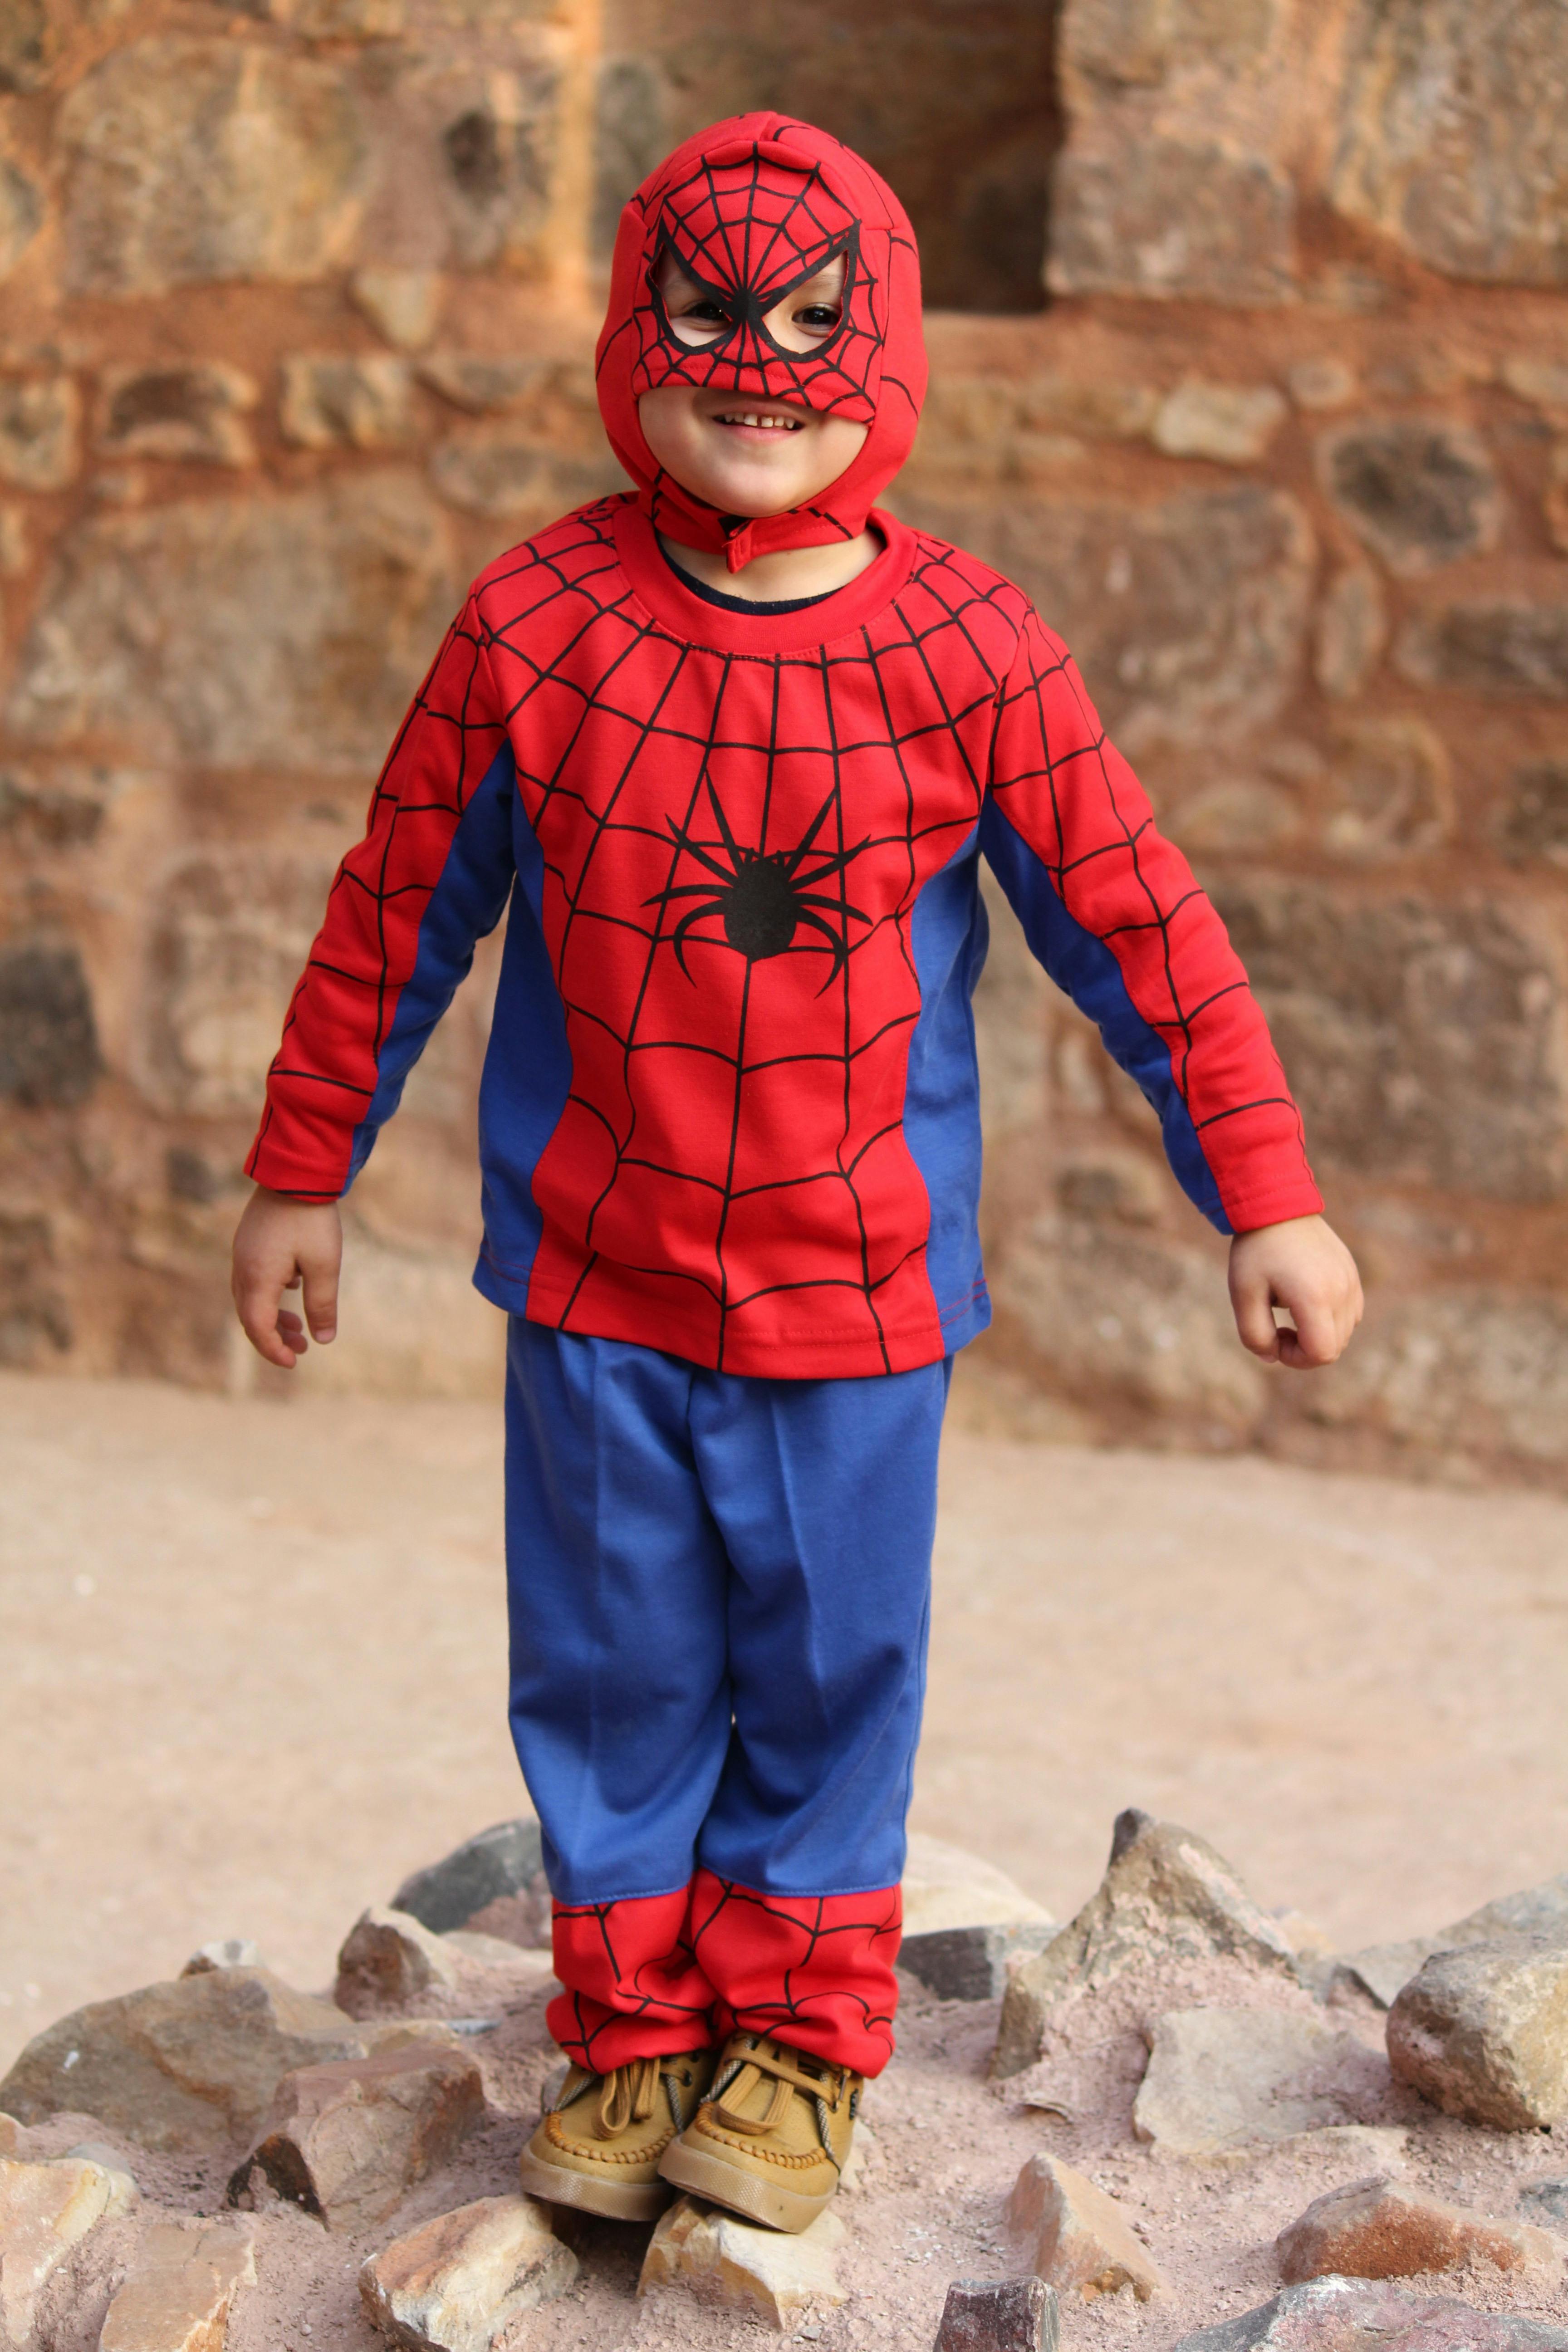 Free stock photo of Spider baby, spider man